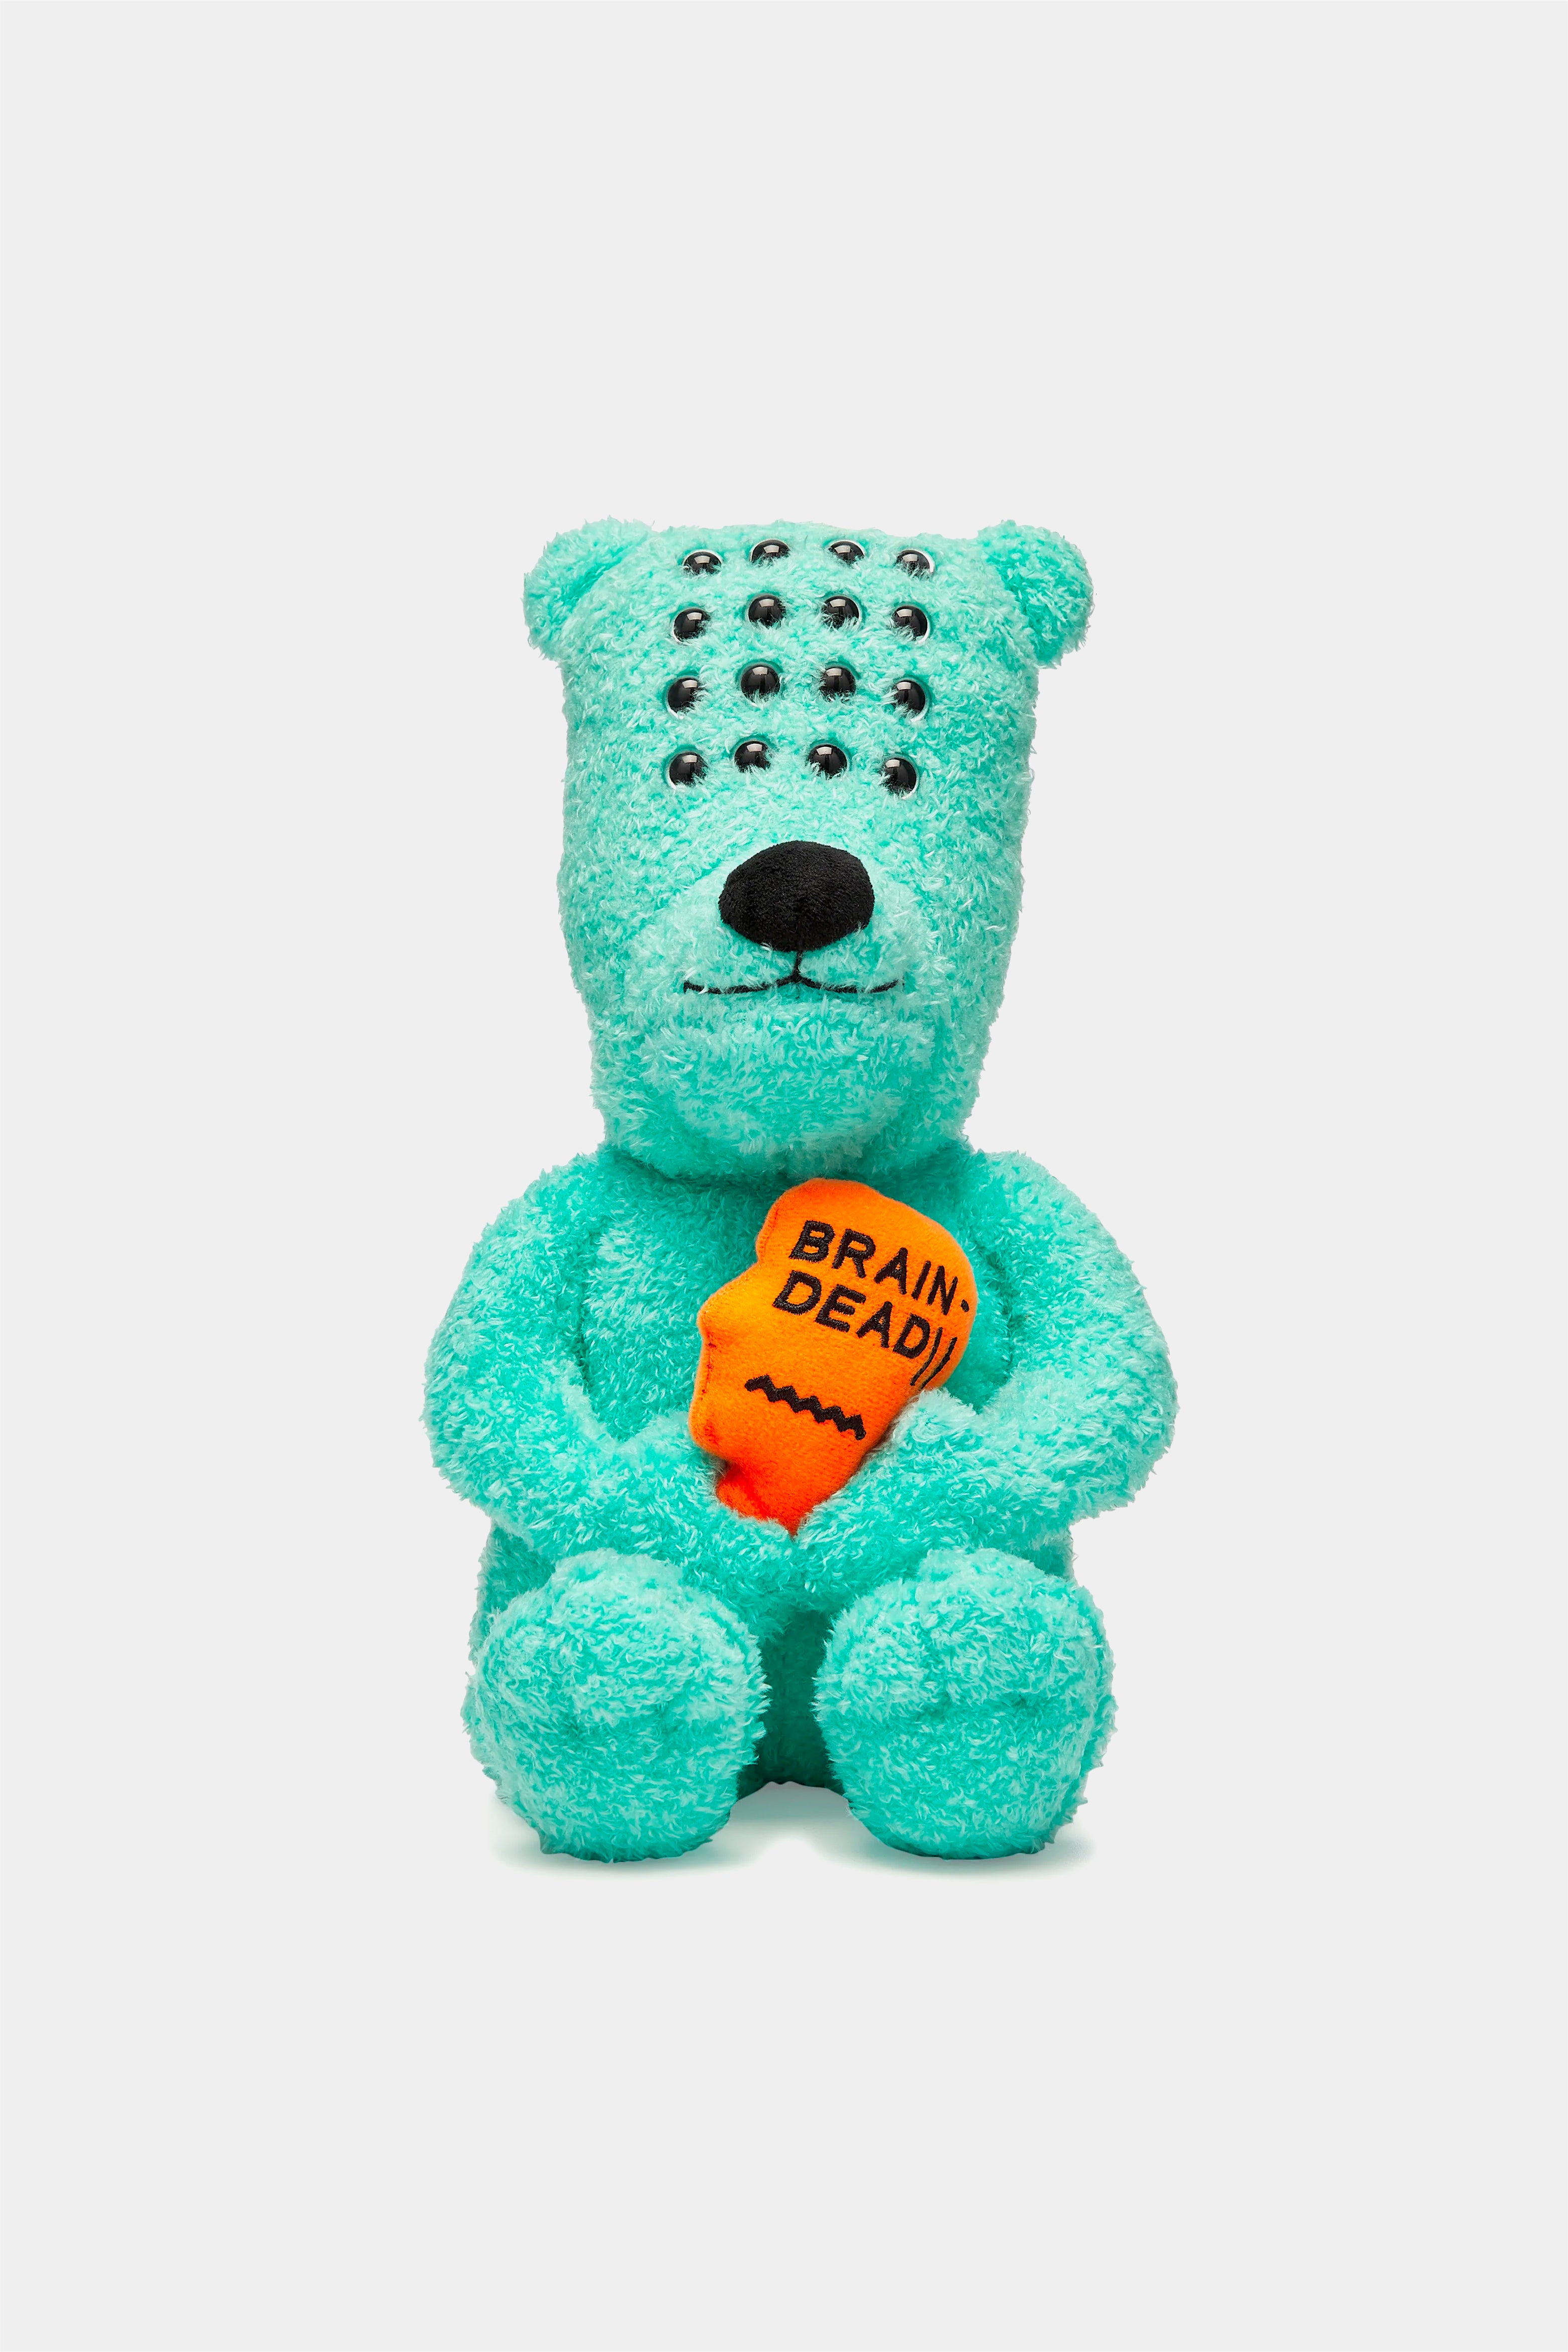 Selectshop FRAME - BRAIN DEAD Kids Teddy Bear All-Accessories Dubai